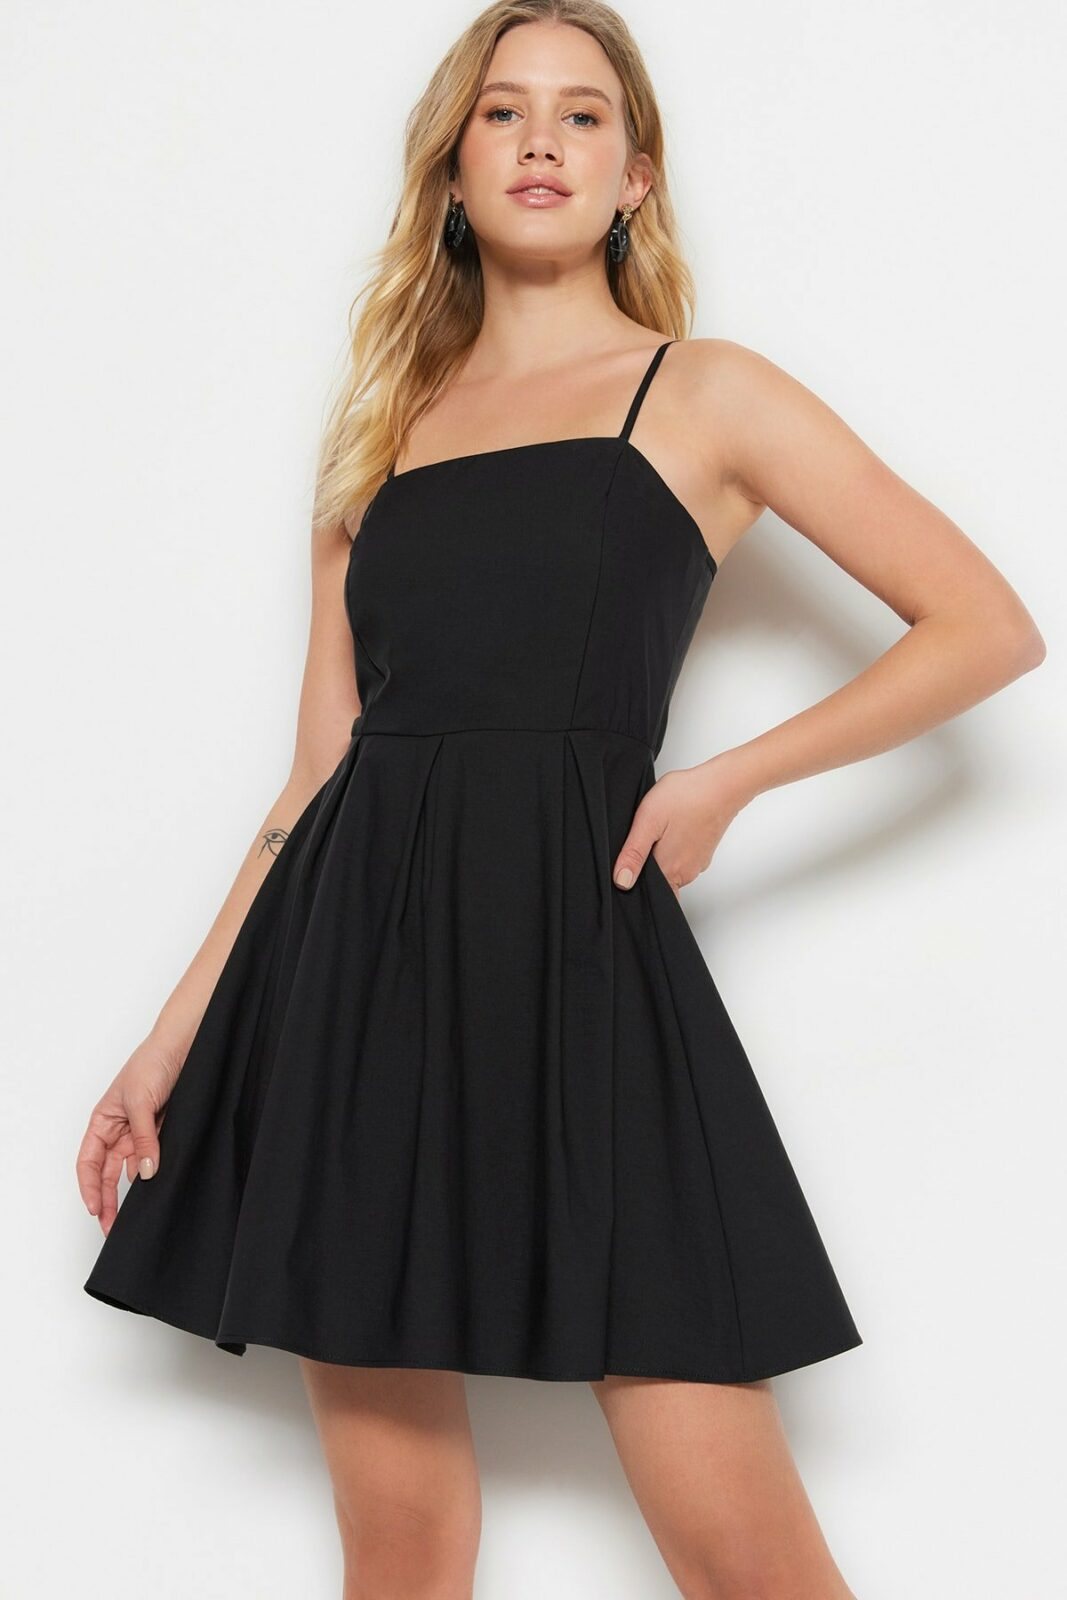 Trendyol Dress - Black